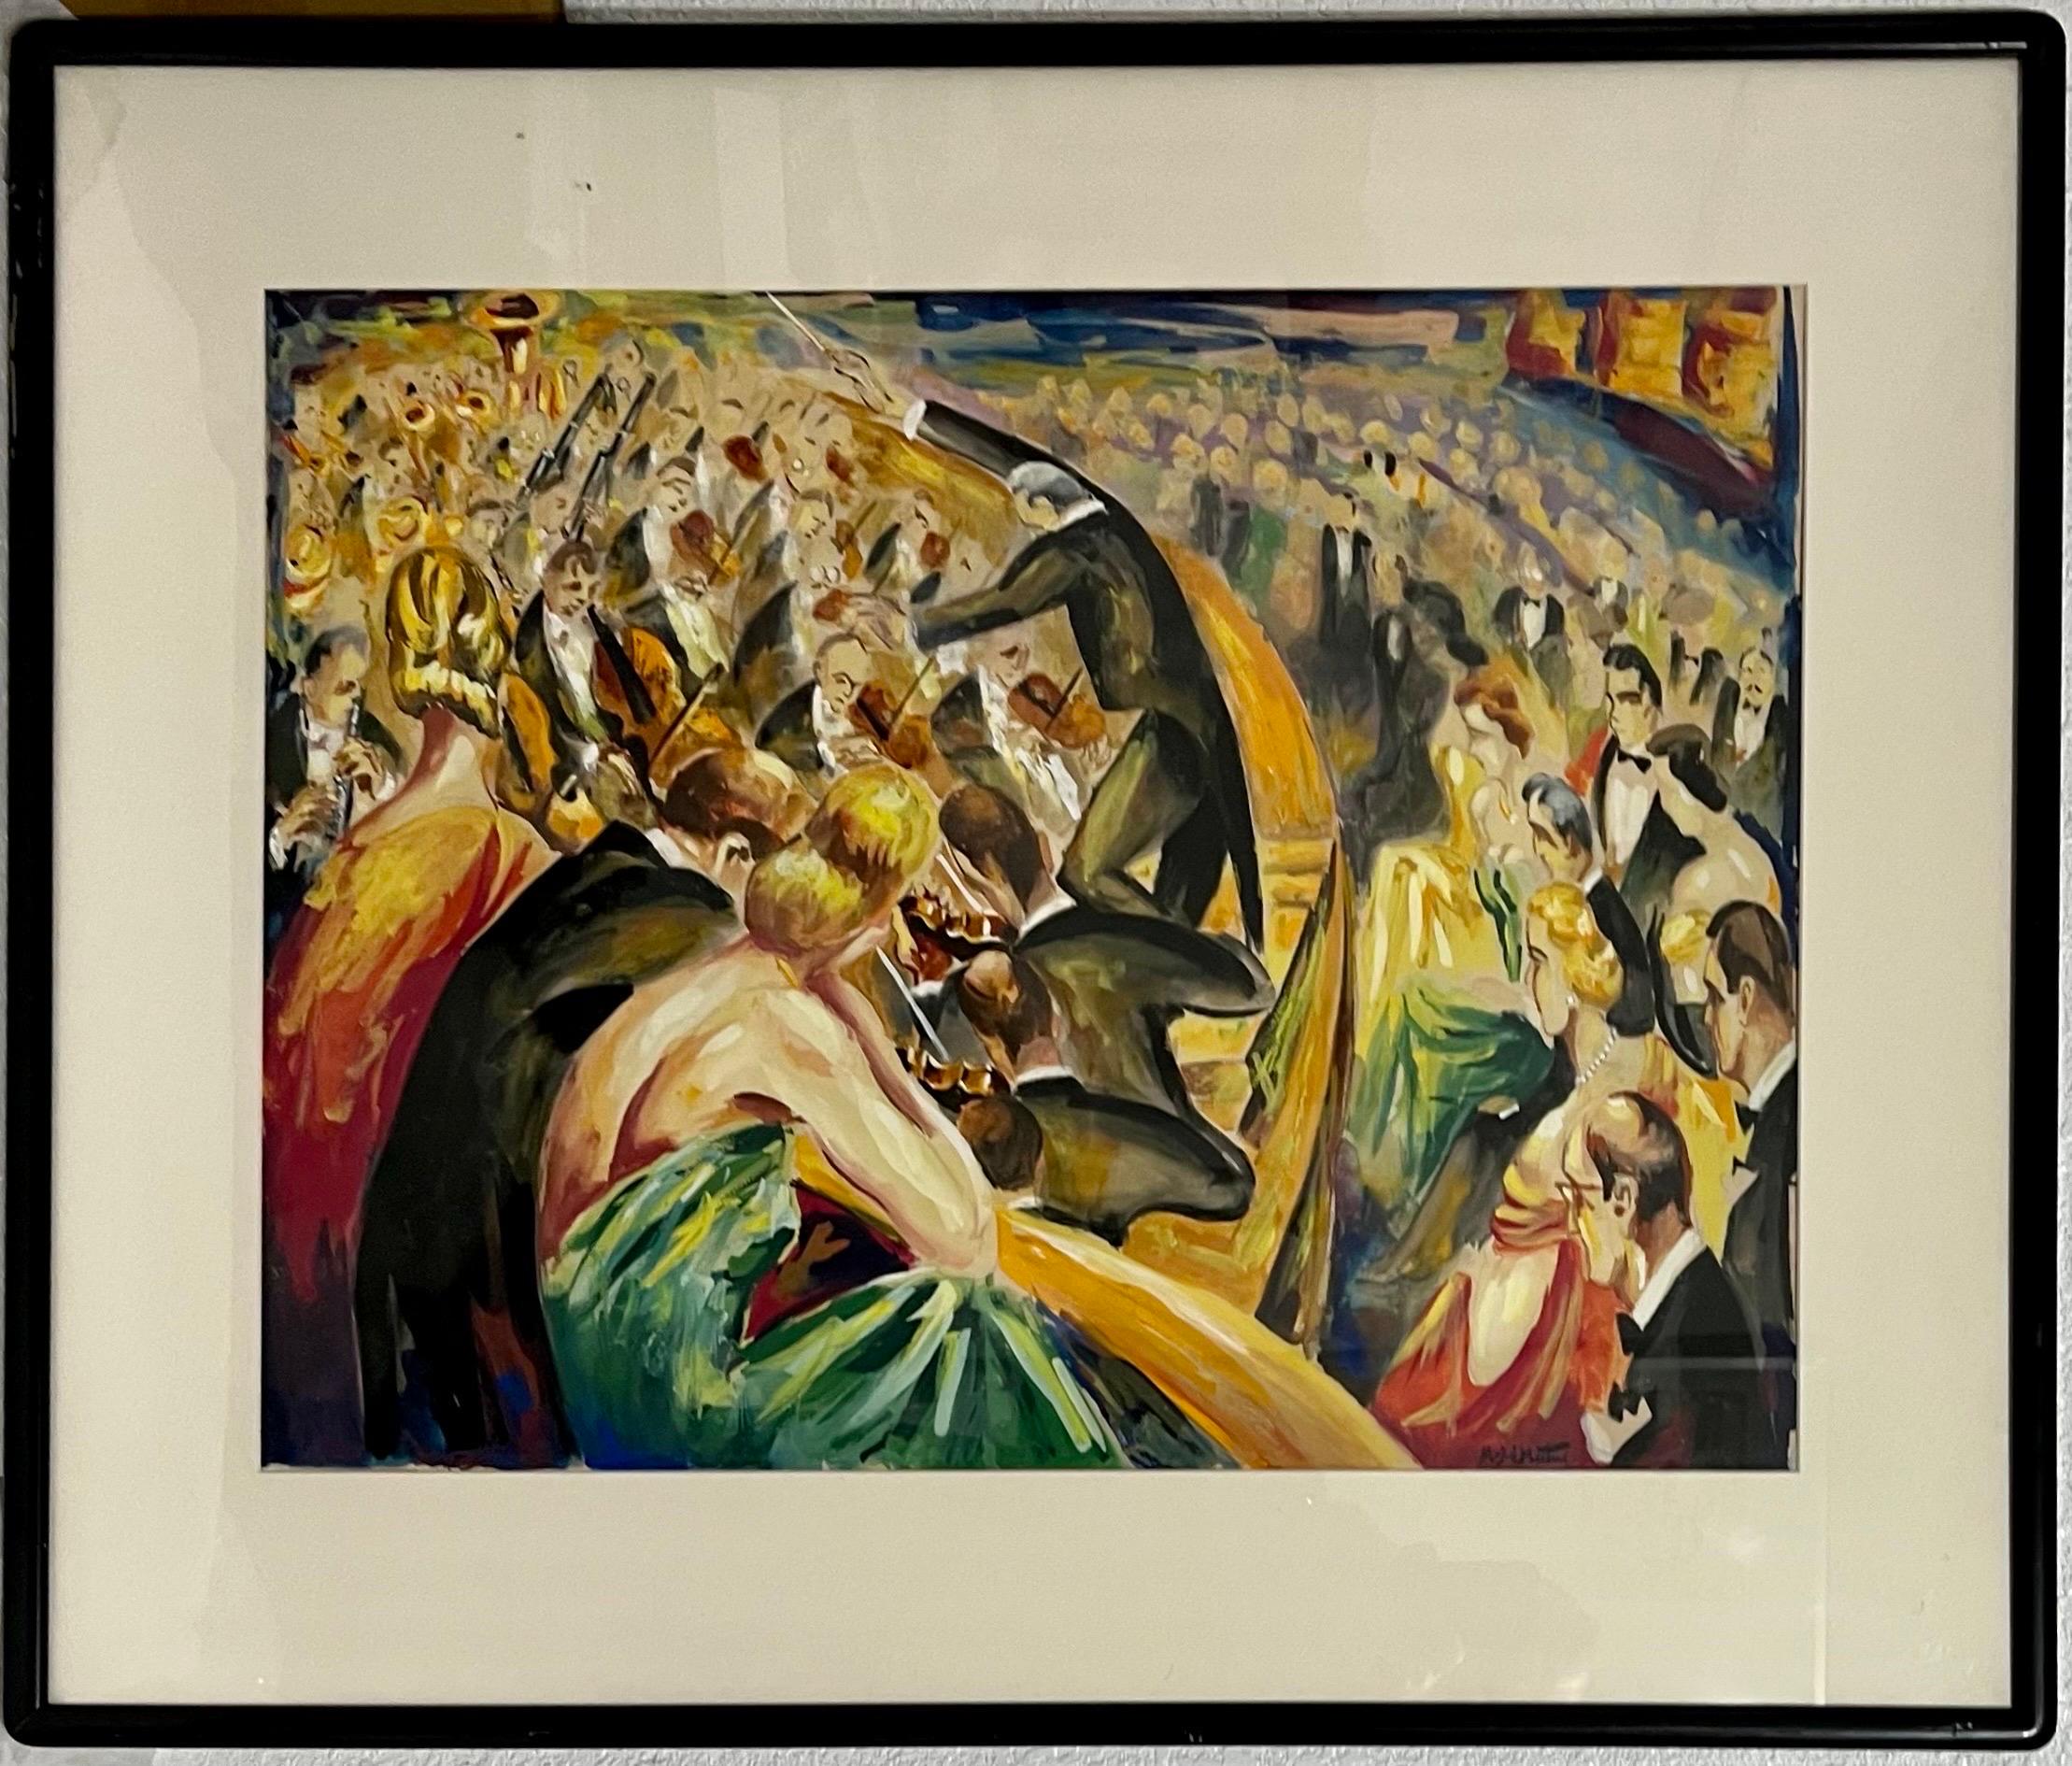 Großes Israelisches Tel Aviv Orchestra Bezalel-Schule, Modernistisches Gemälde Moshe Matus – Painting von Moshe Matus (Matusovsky)